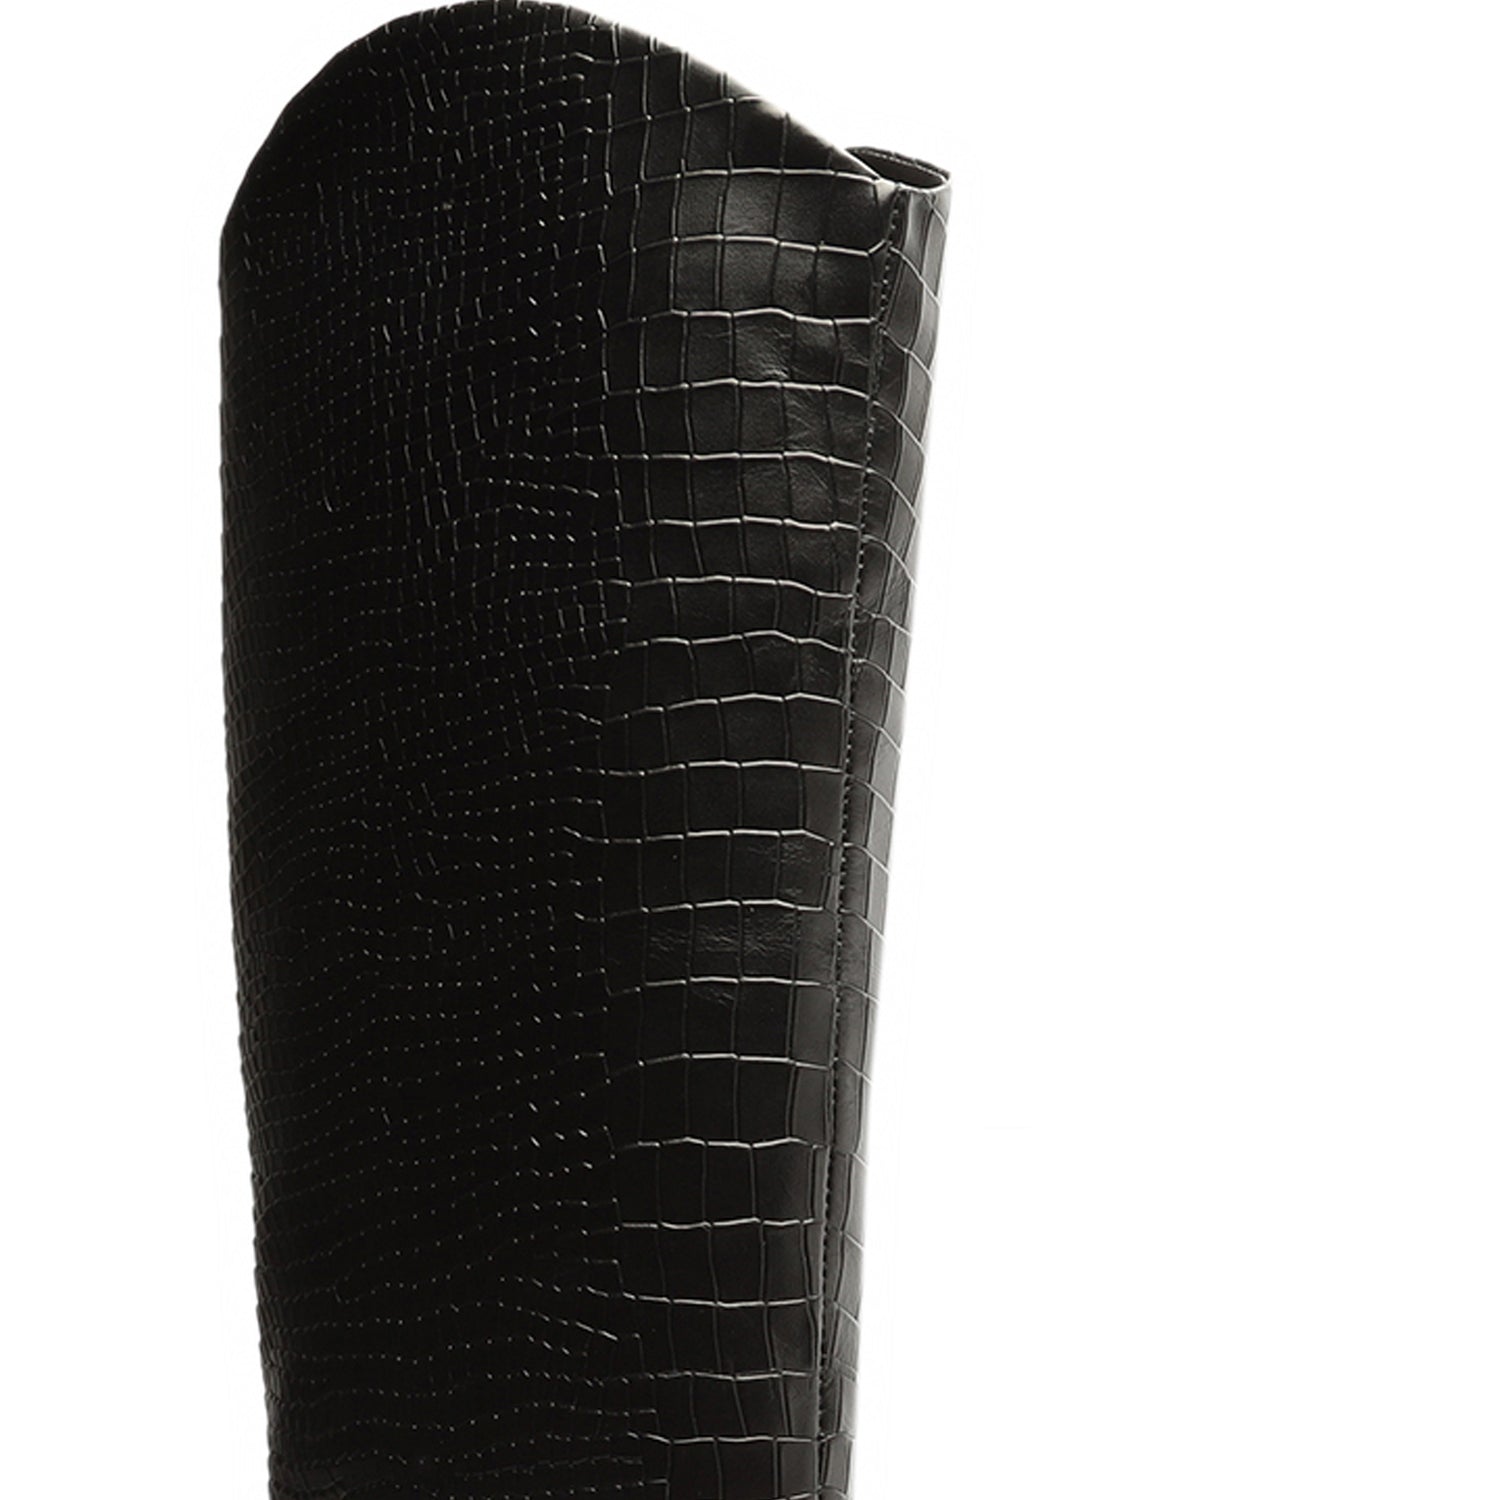 Schutz Maryana Women's Boots Black : 8.5 M